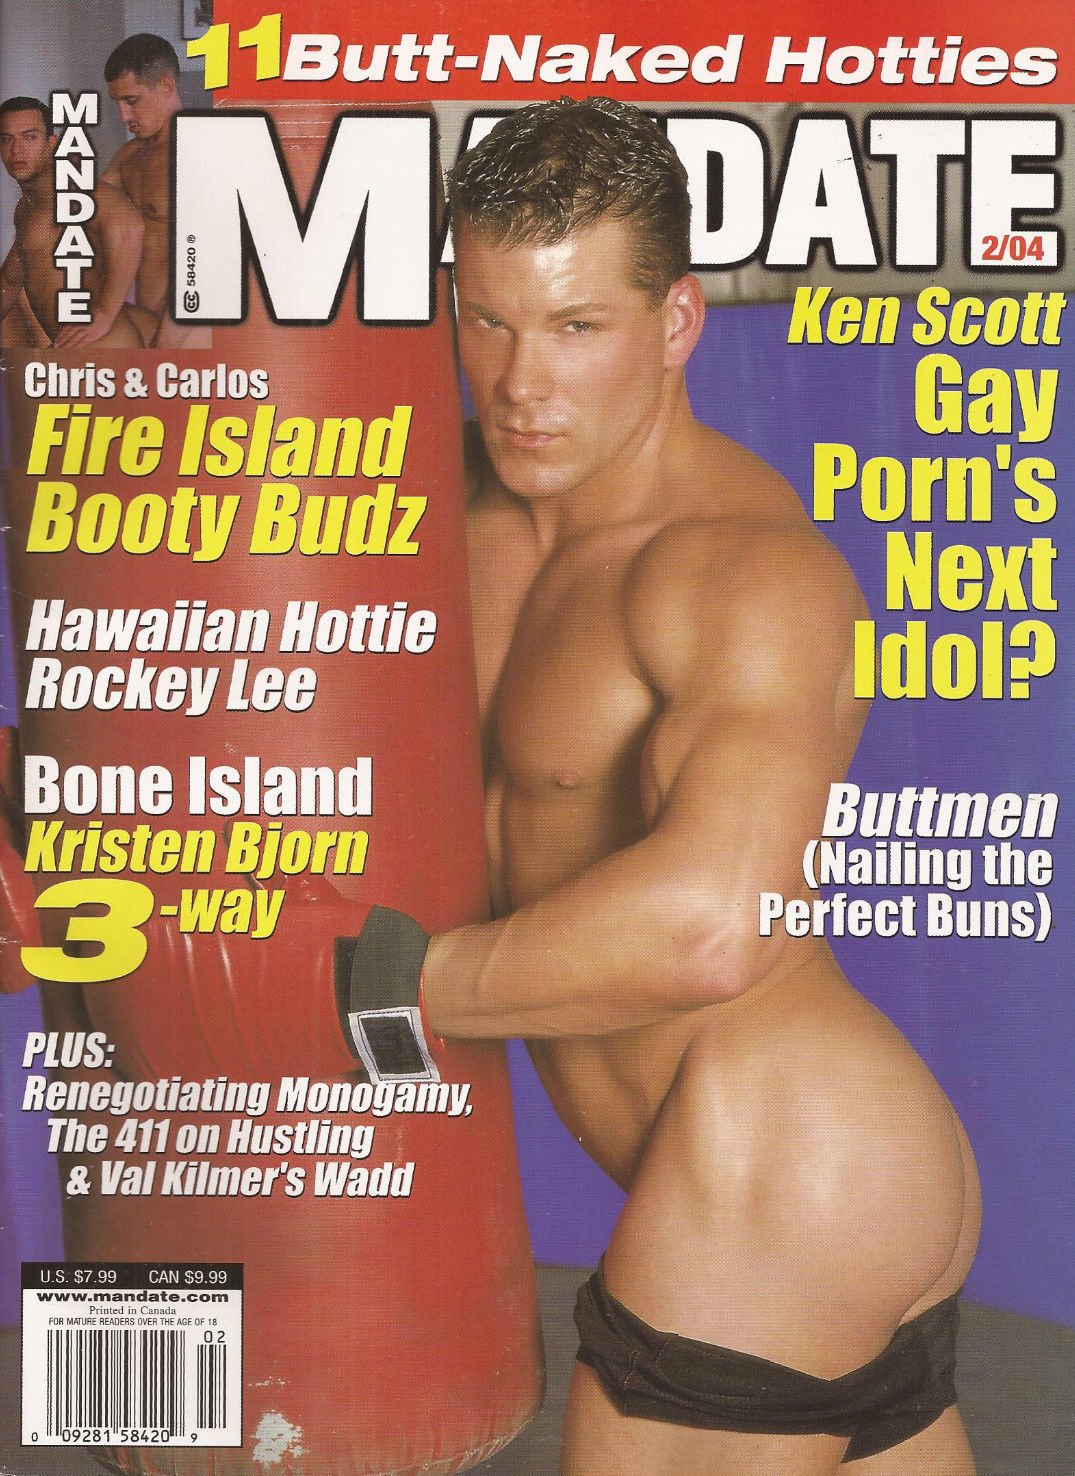 Mandate February 2004 magazine back issue Mandate magizine back copy Mandate February 2004 Gay Adult Magazine Back Issue Published by the Mavety Publishing Group in the USA since 1975. Chris & Carlos Fire Island Booty Budz.